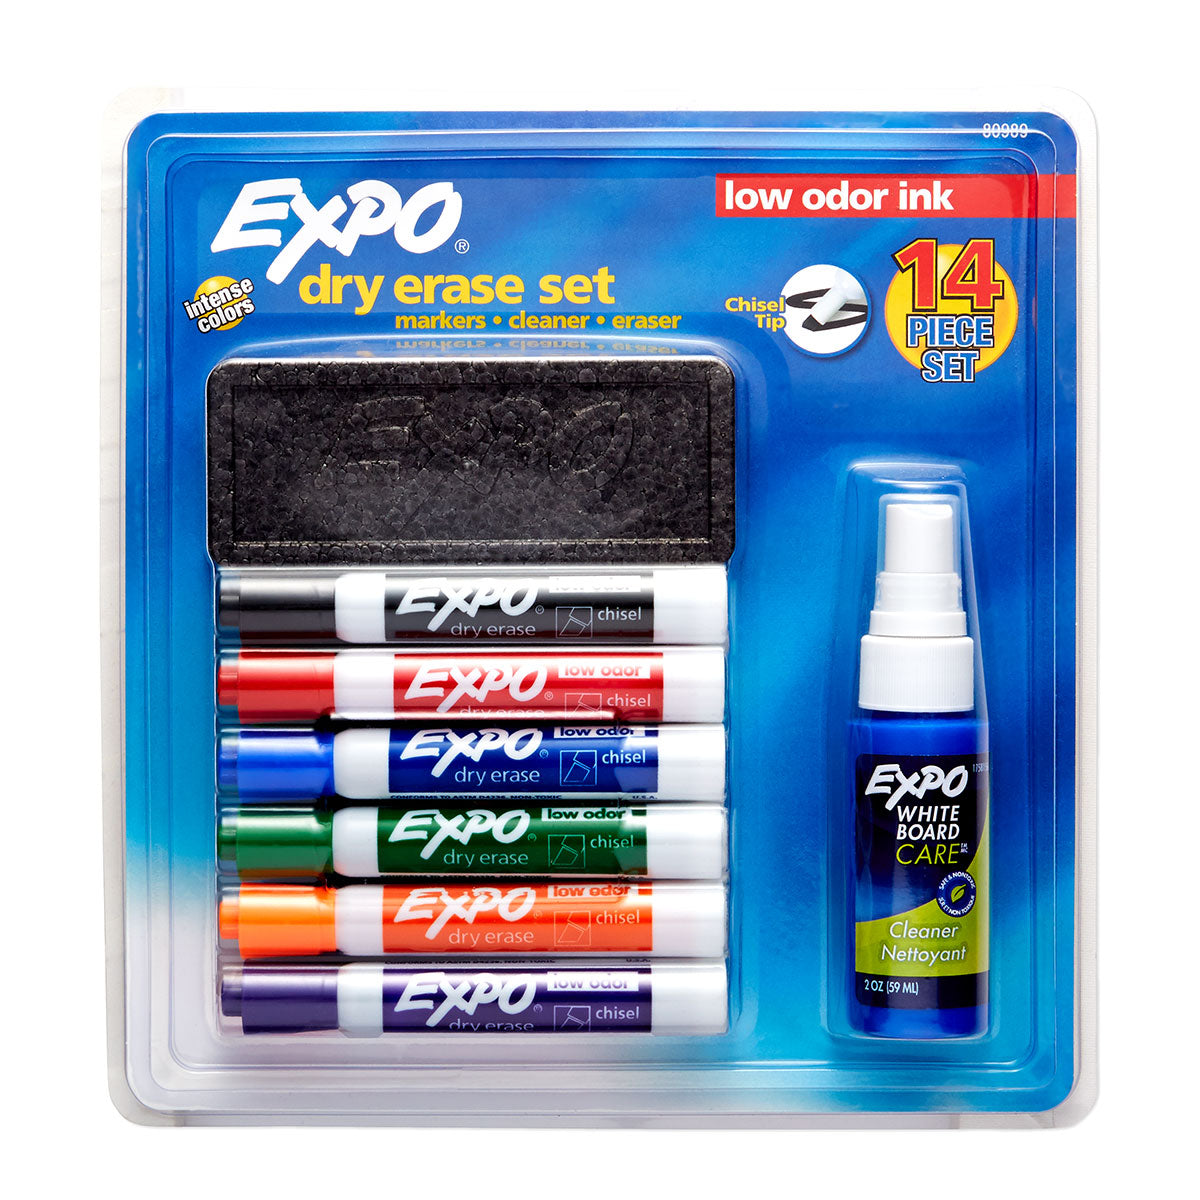 Mr. Pen- Mini Dry Erase Eraser and Dry Erase Markers